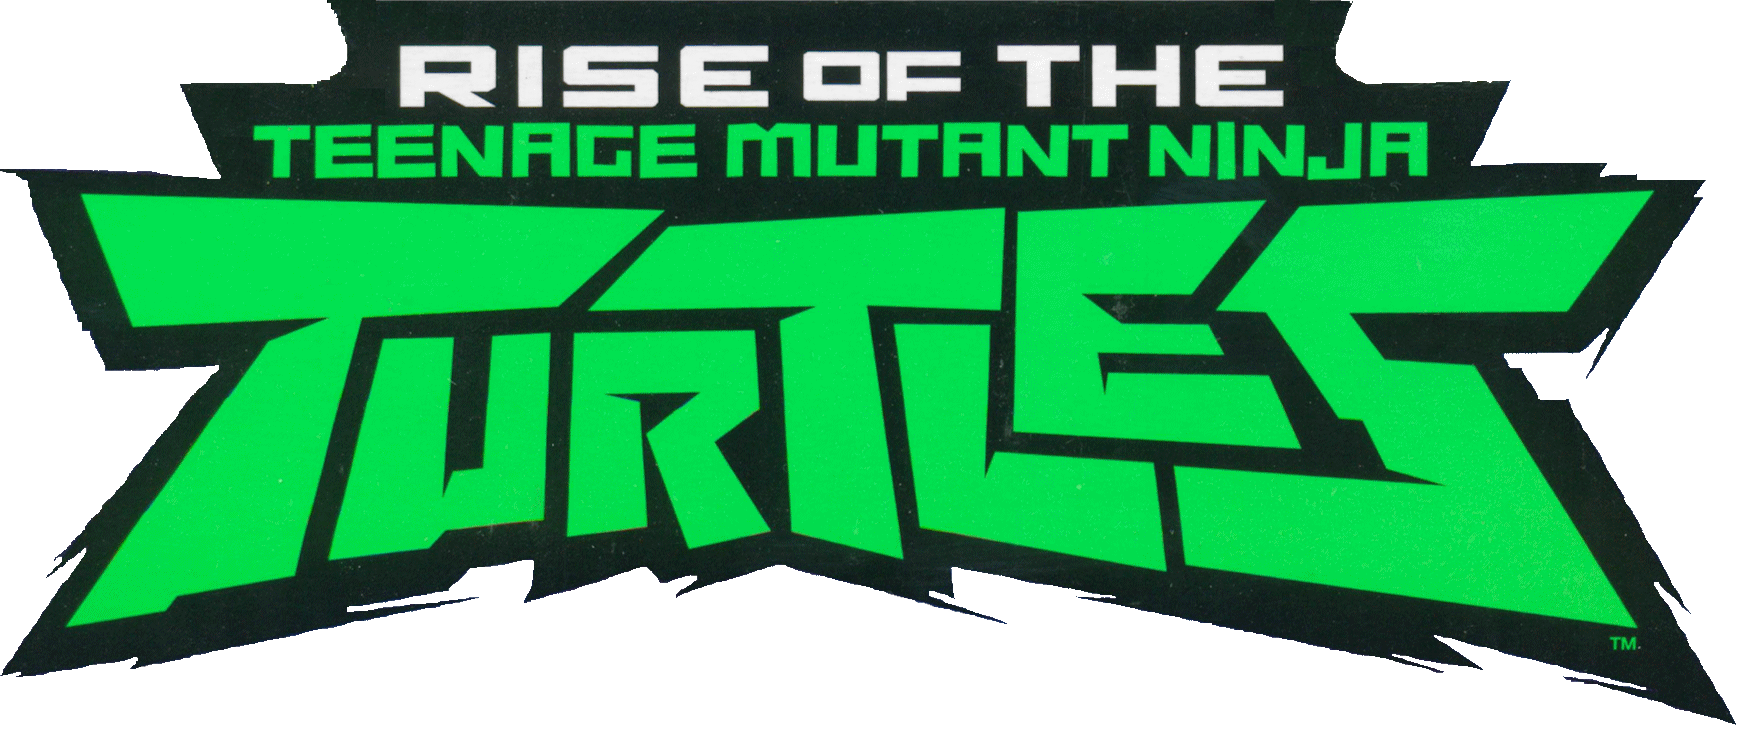 Teenage Mutant Ninja Turtles TMNT SDCC Comic Con 2012 Exclusive All Over Original Vintage T-Shirt